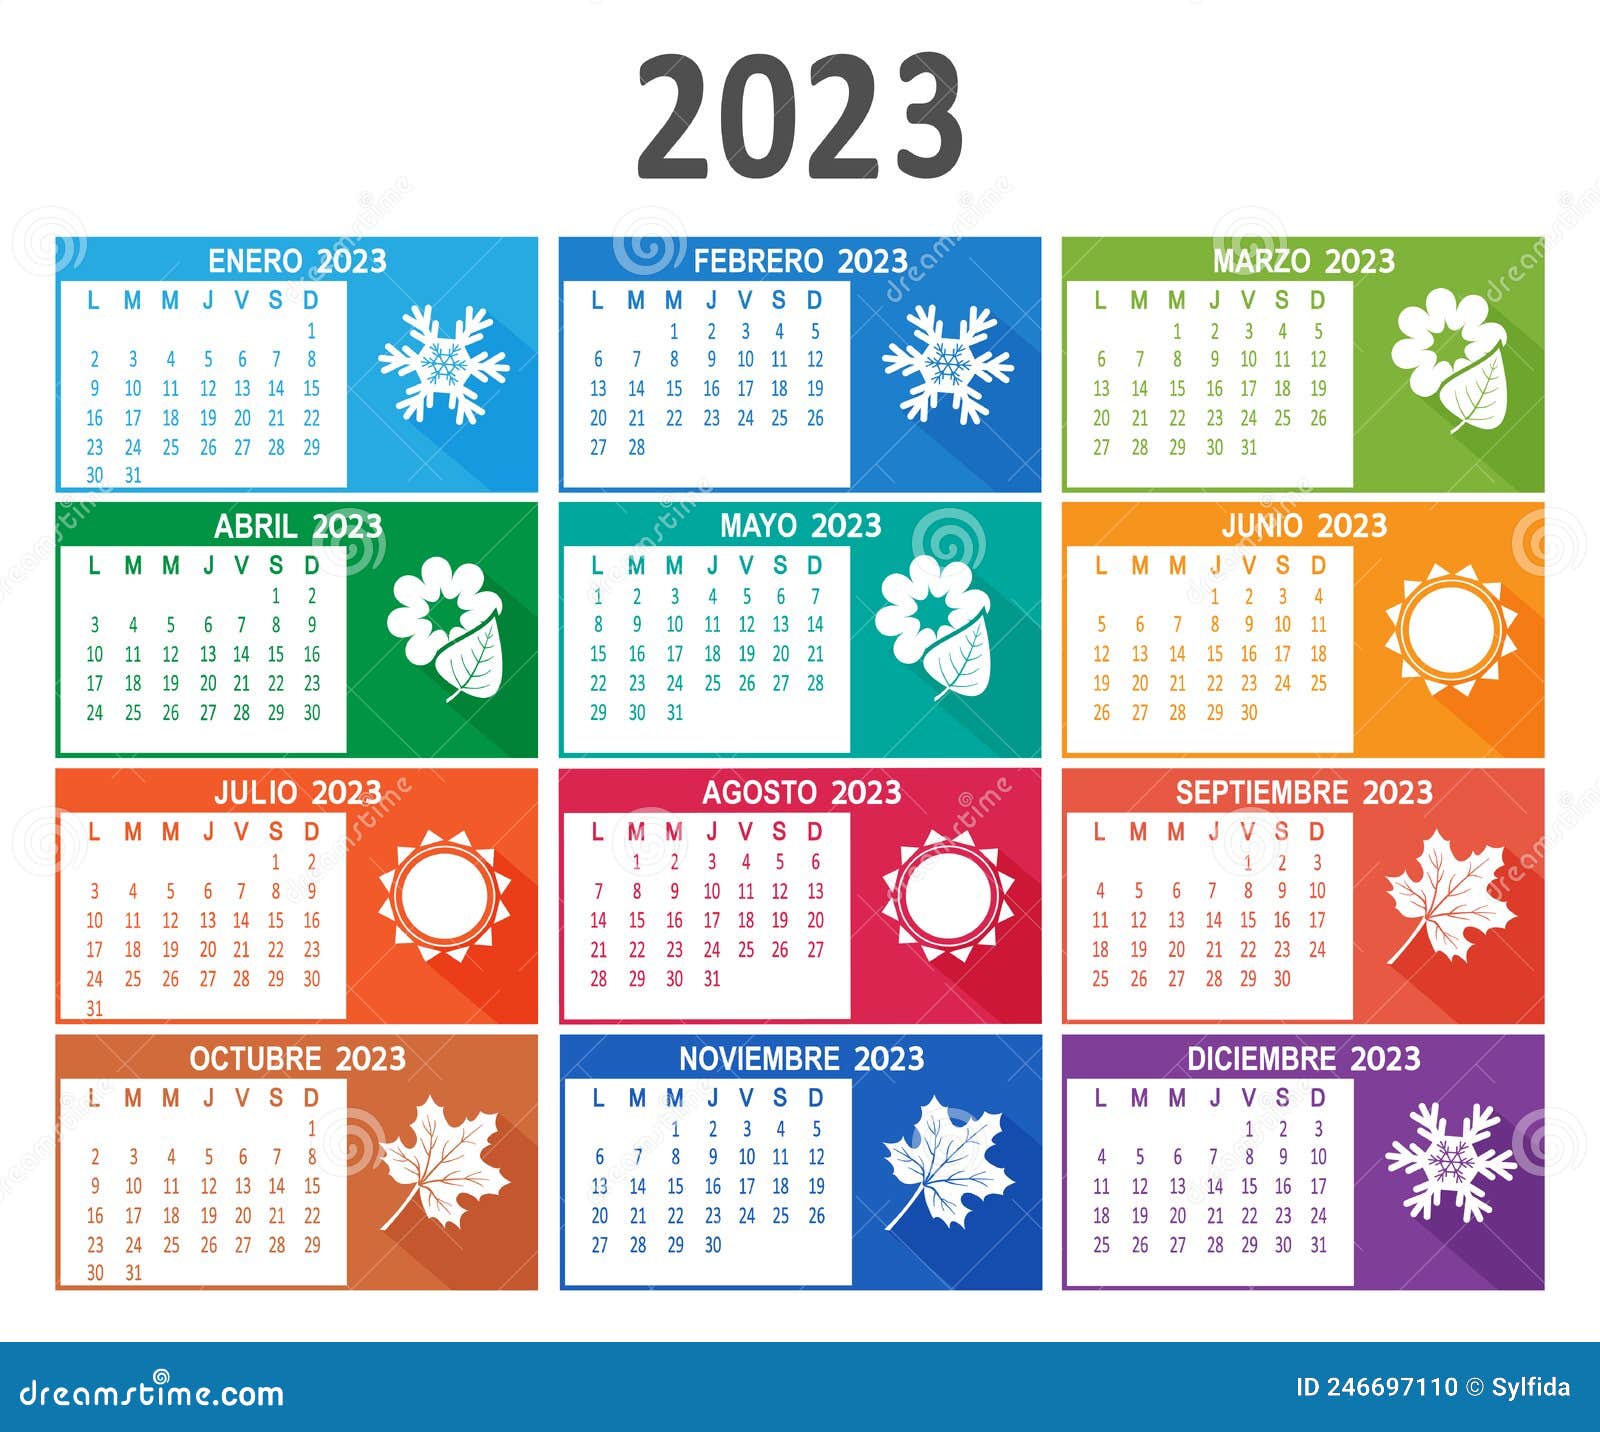 2023 year spanish calendar. week starts on lunes monday. 